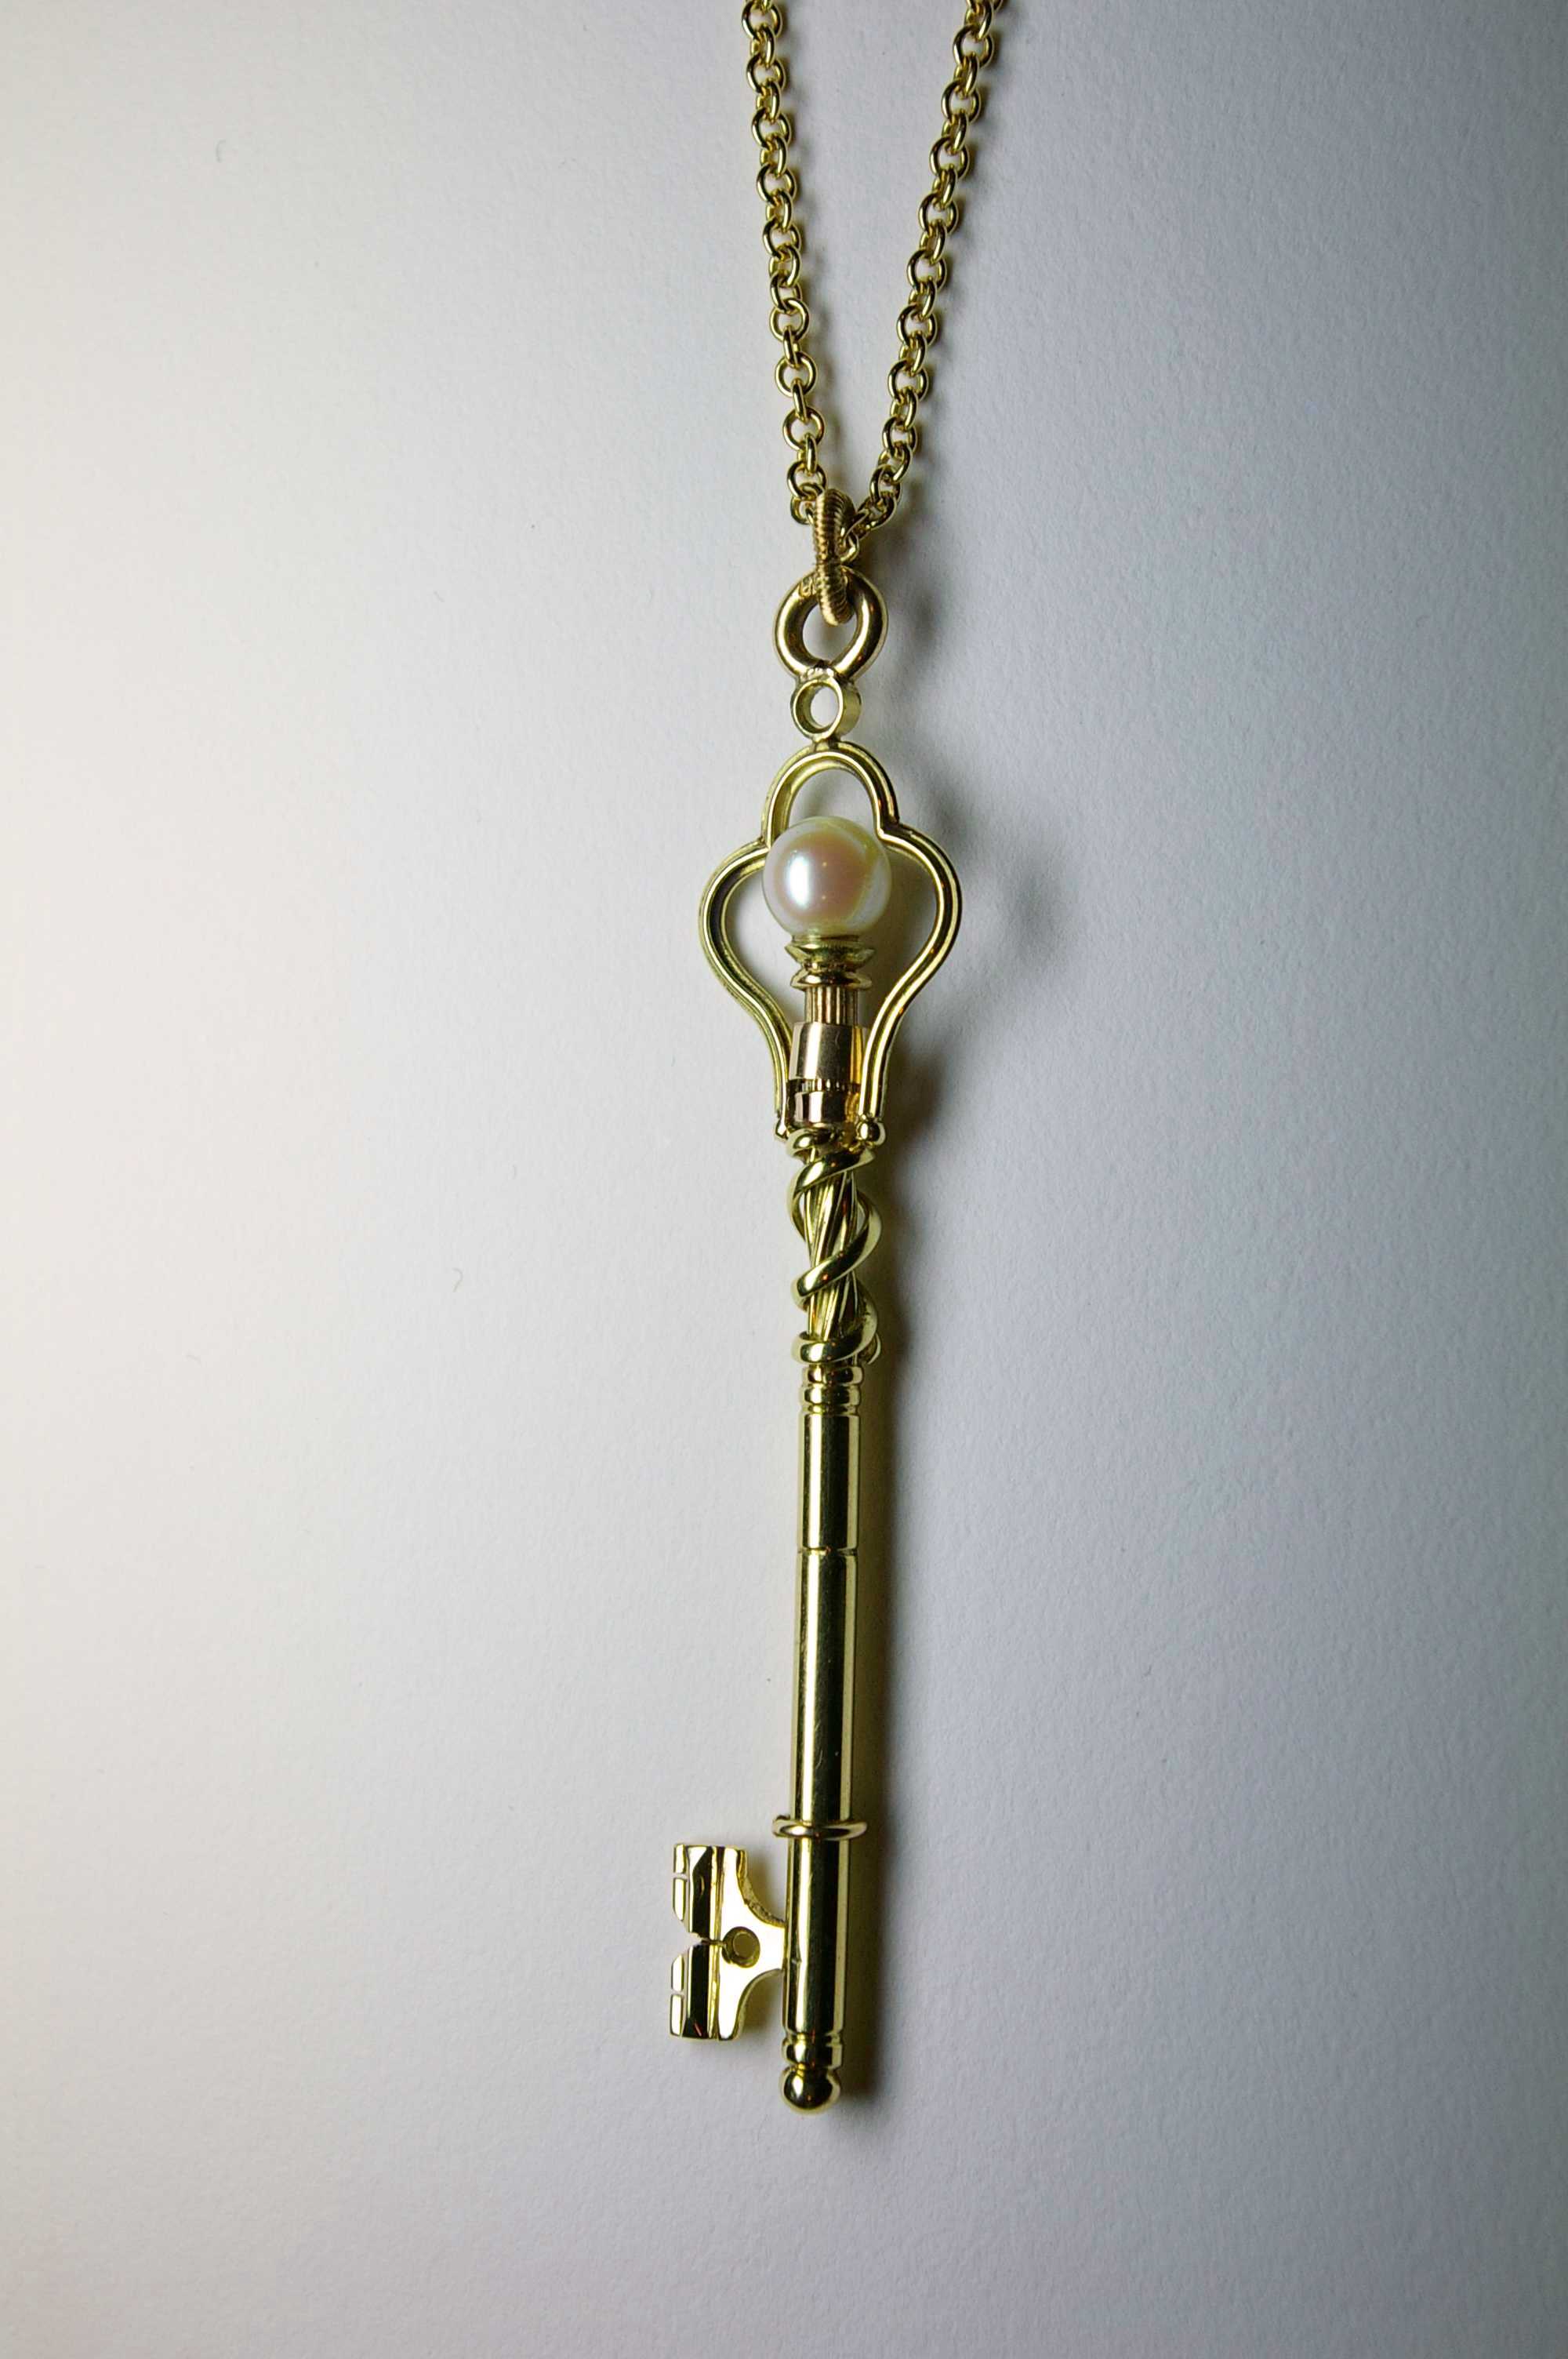 Crooked Teeth Keys - Some beautiful 1800s fancy keys up for grabs